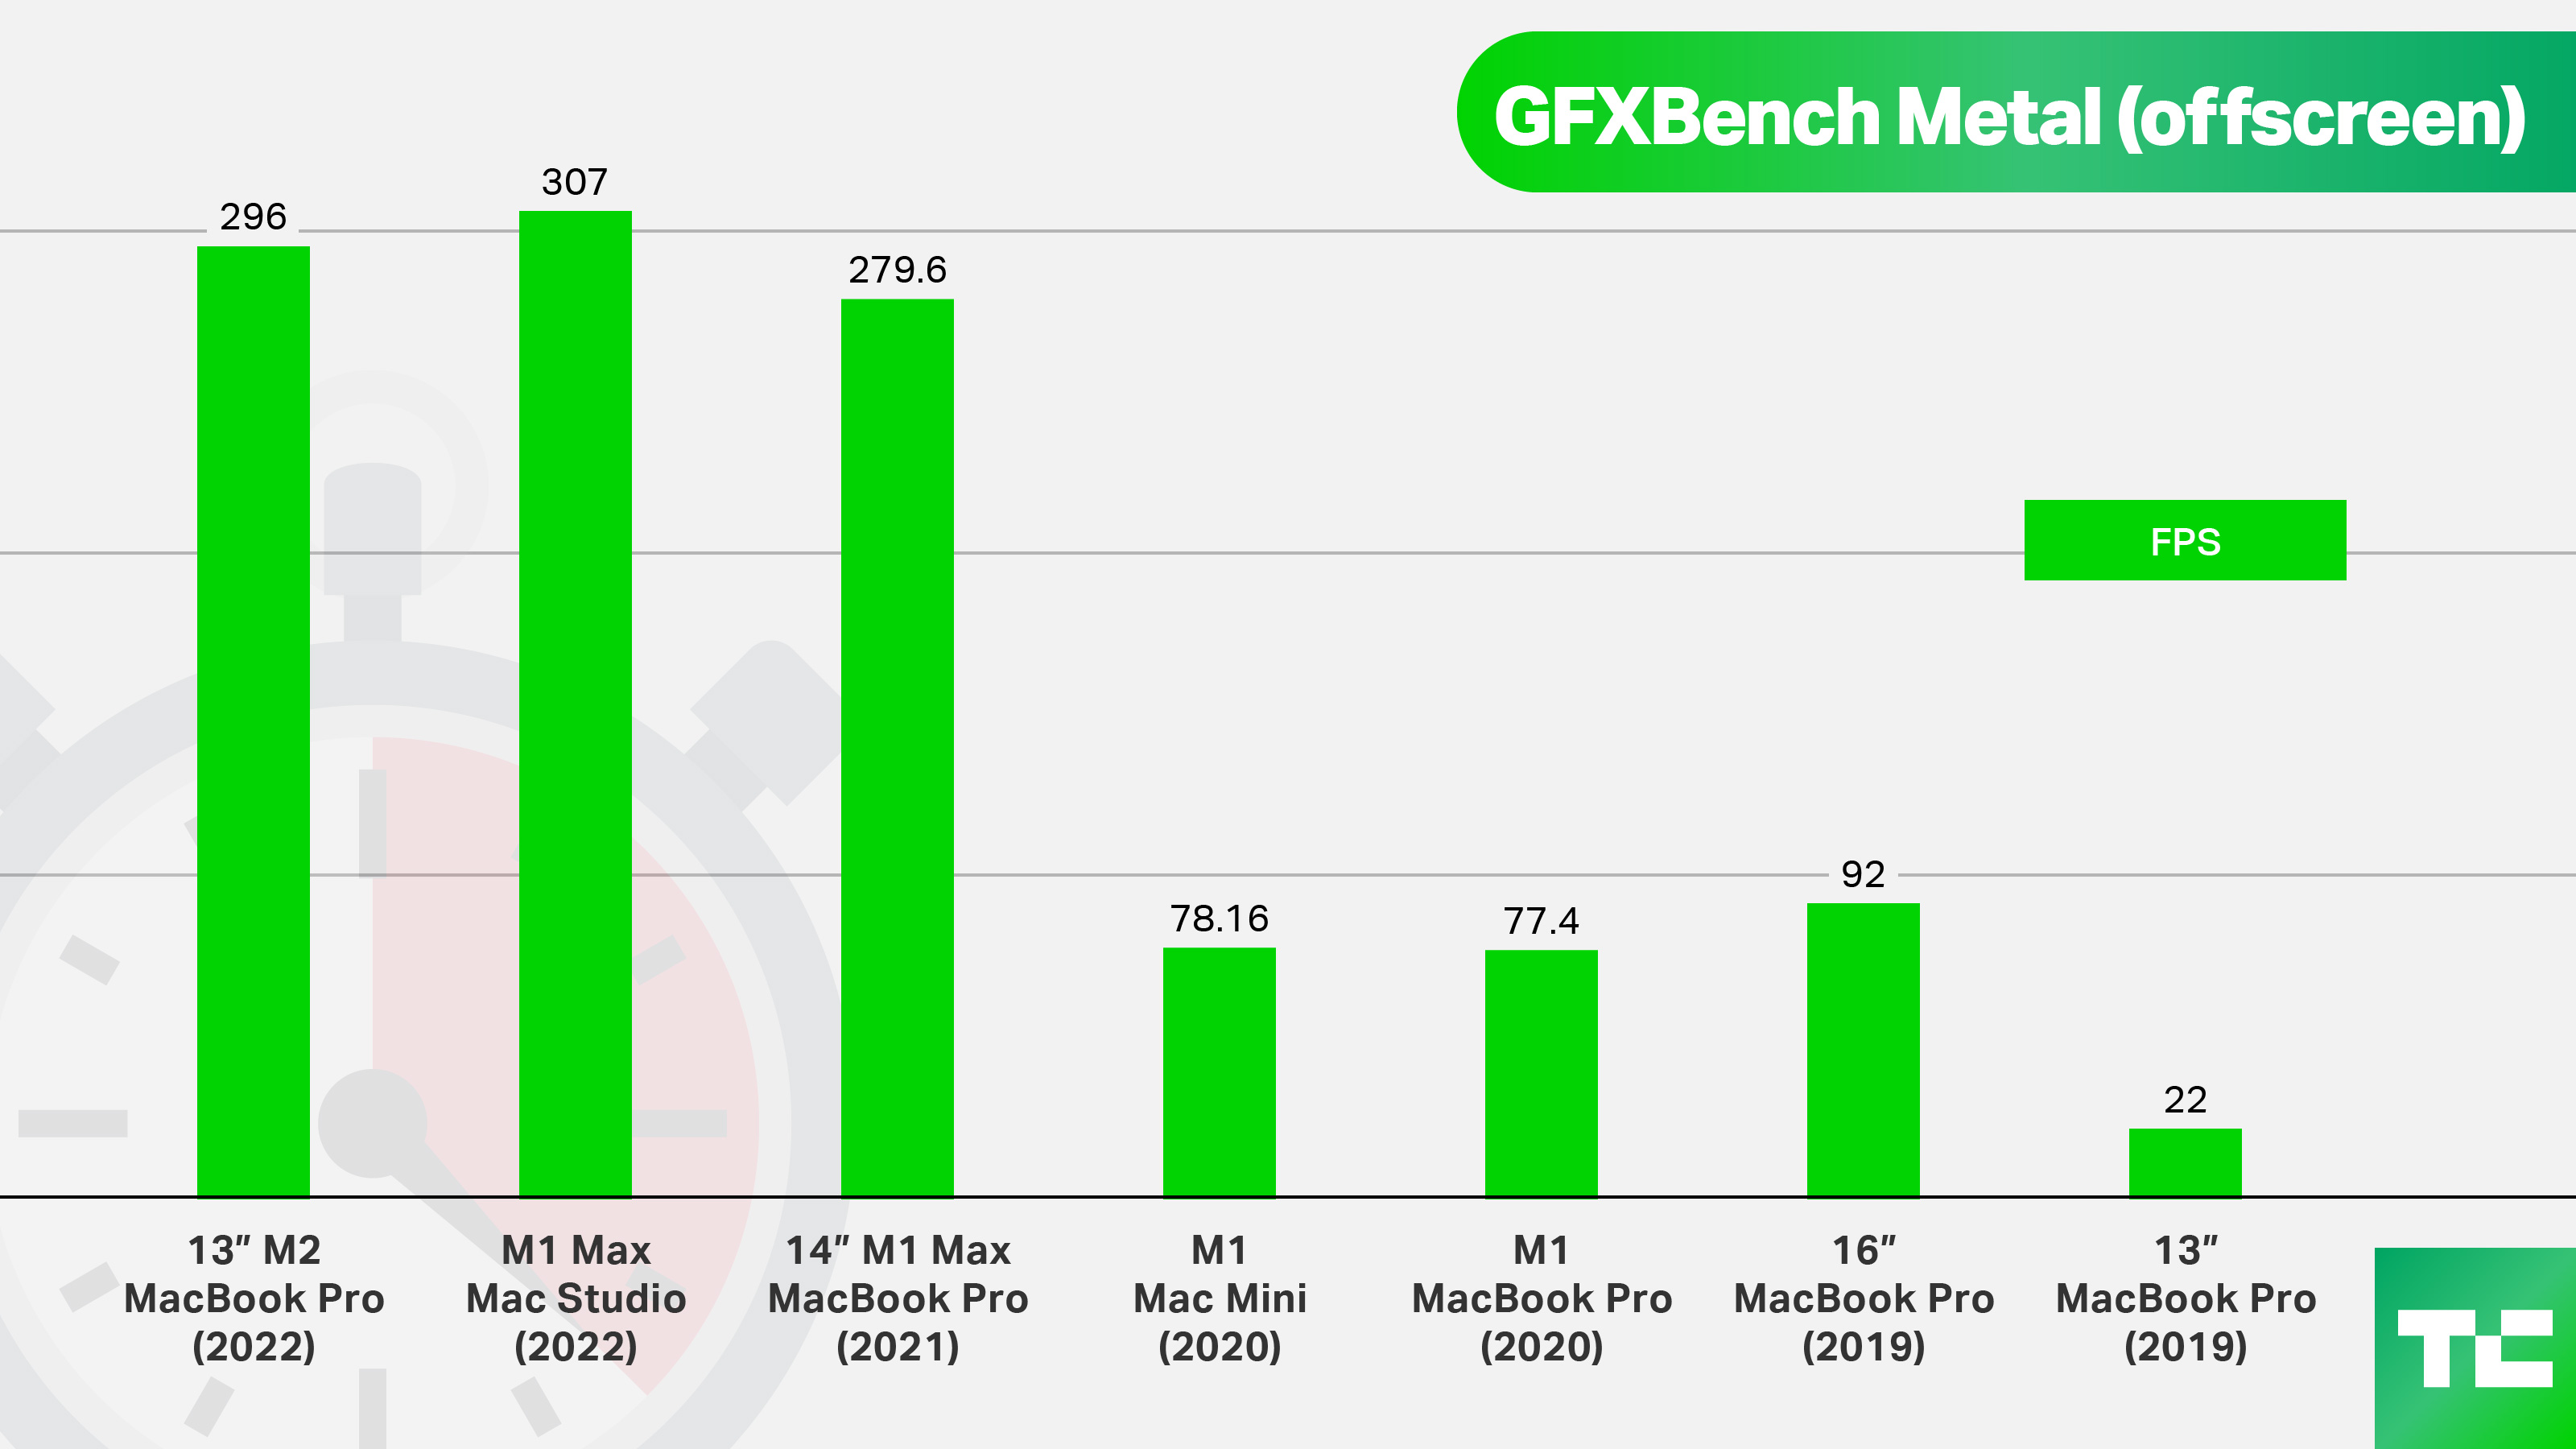 GFXBench Metal (offscreen). 13" M2 MacBook Pro (2022): 296